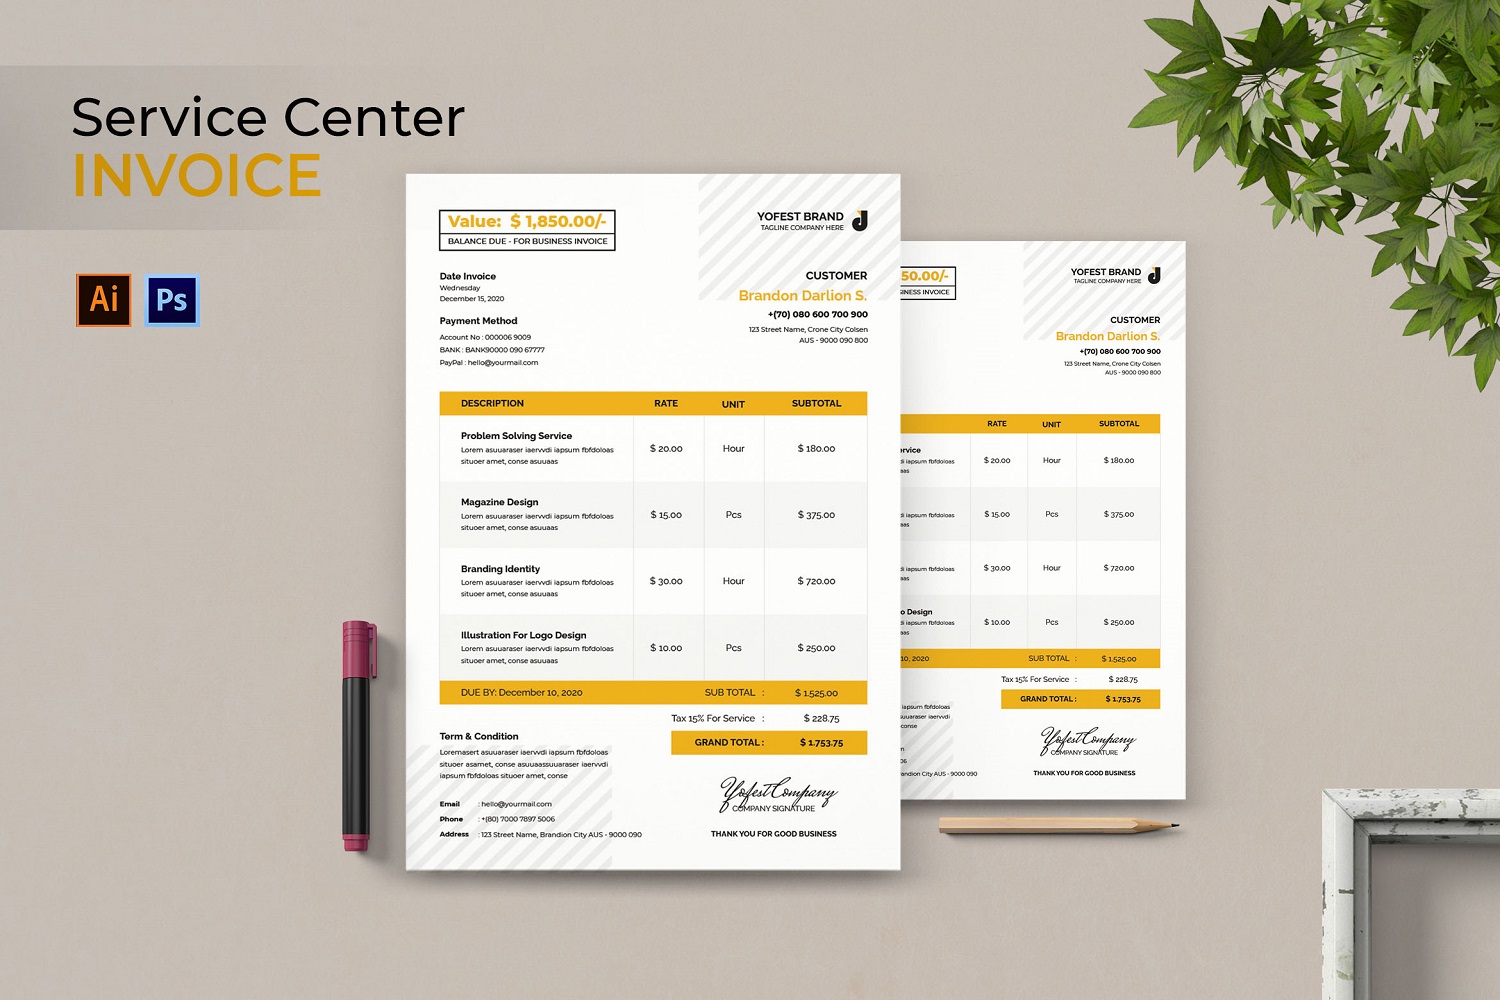 Service Center Invoice Corporate identity template